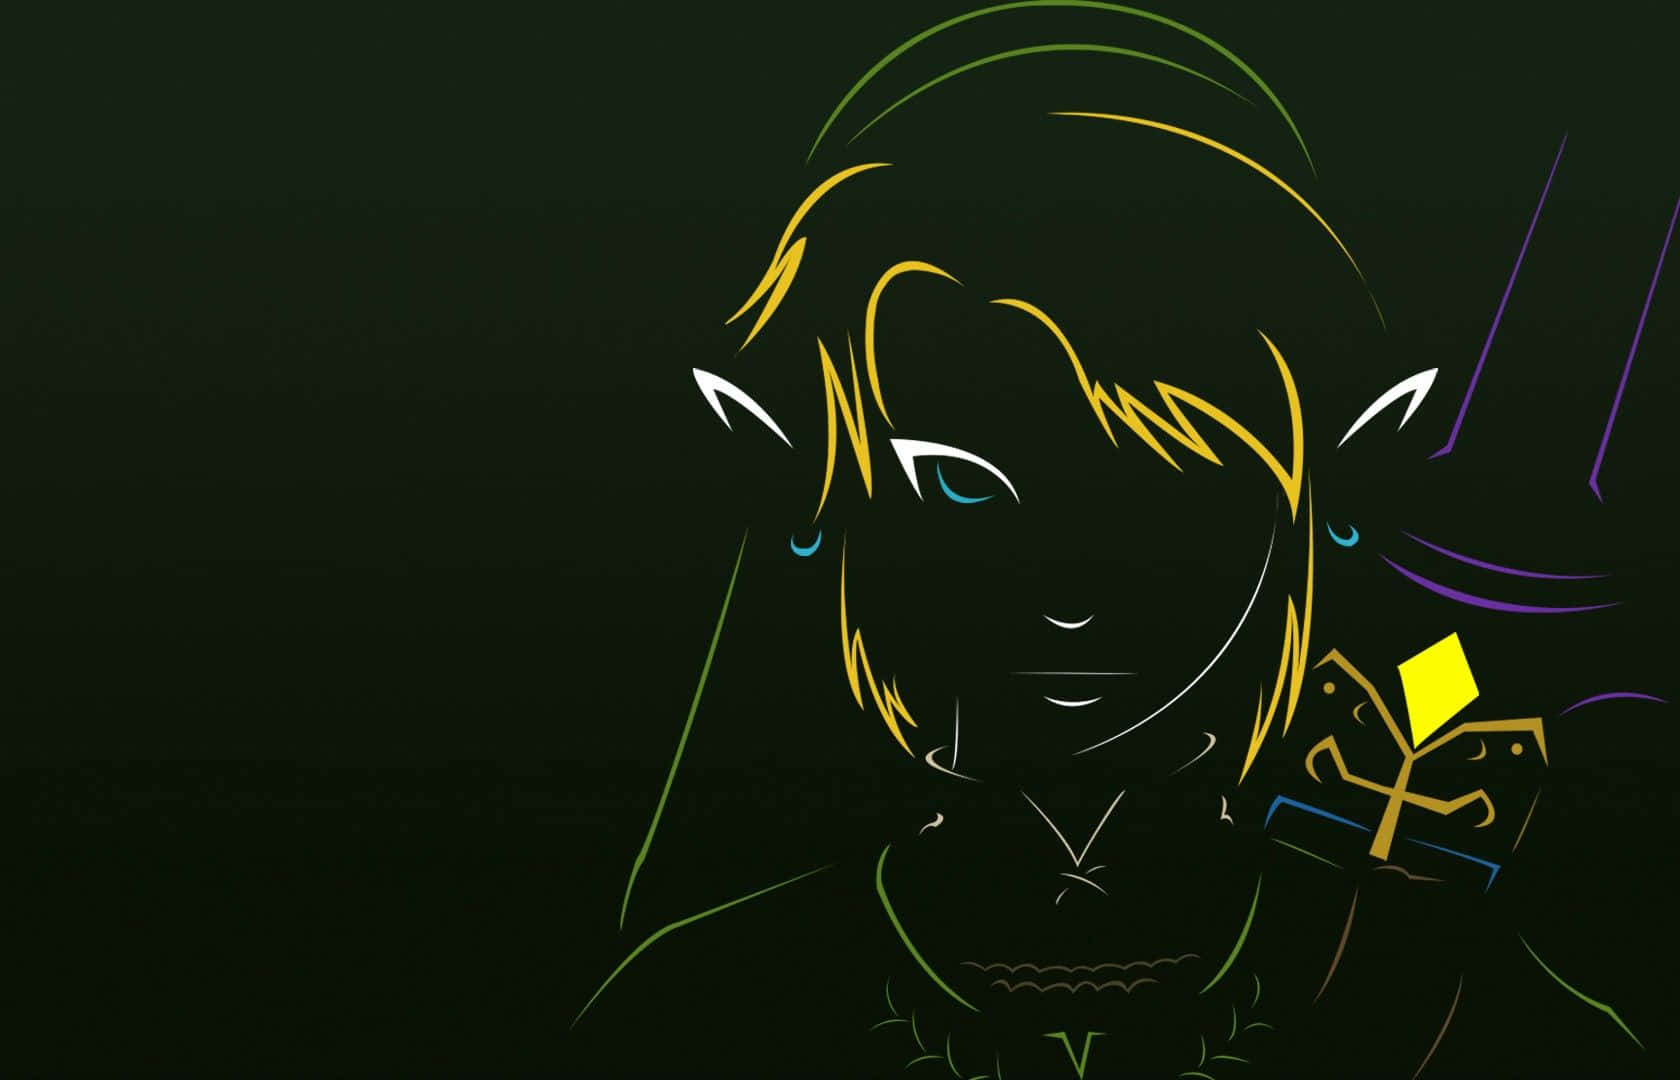 Gedig Ut På Spännande Äventyr Genom Hyrule Med The Legend Of Zelda.